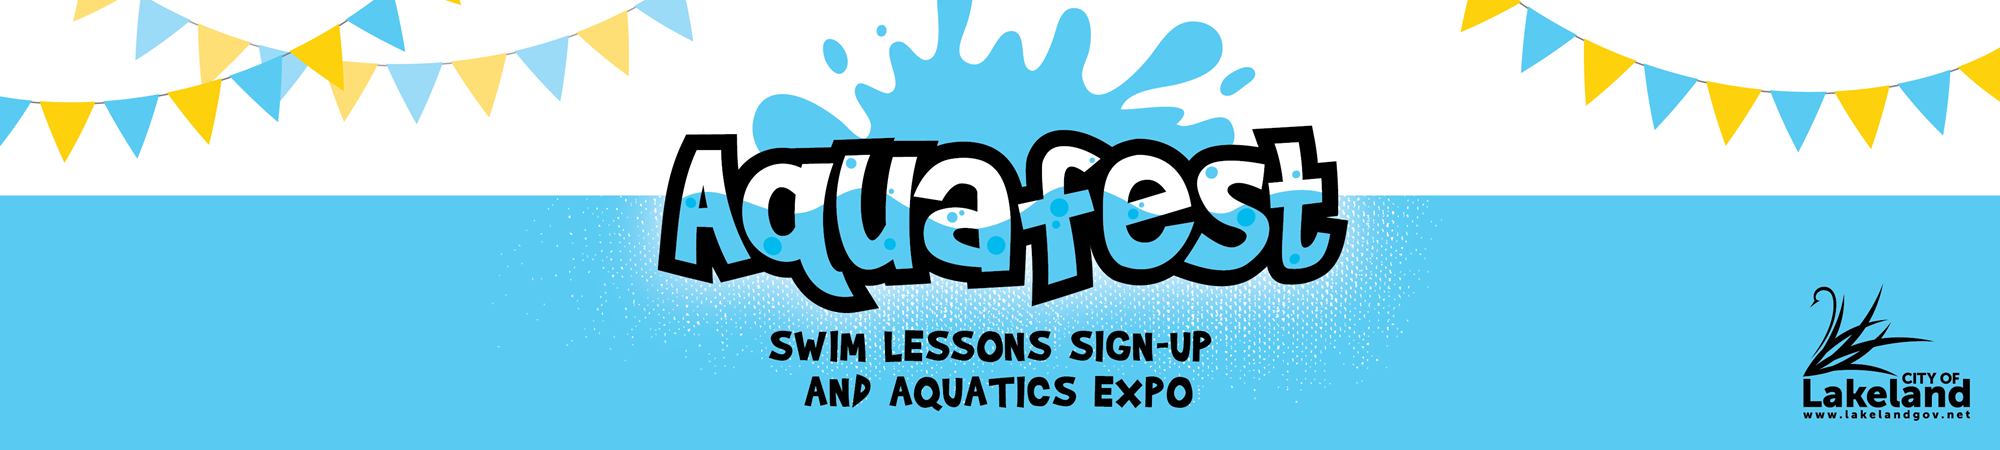 Aquafest Swim Lesson Sign-up and Aquatics Expo